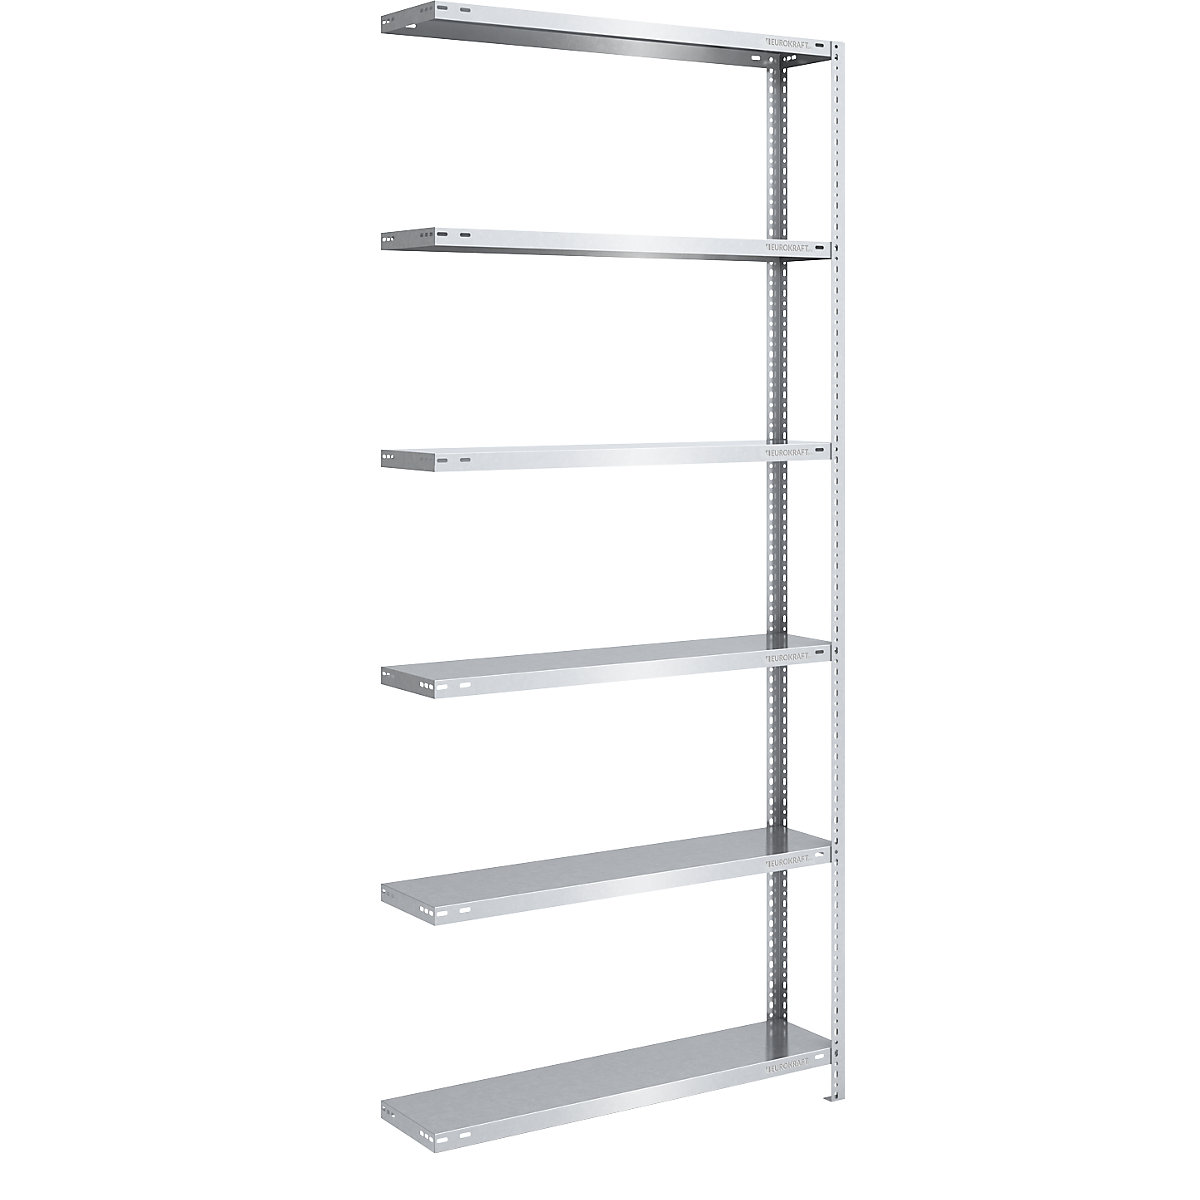 Bolt-together storage shelving, zinc plated, medium duty – eurokraft pro, shelf unit height 2500 mm, shelf width 1000 mm, depth 300 mm, extension shelf unit-4